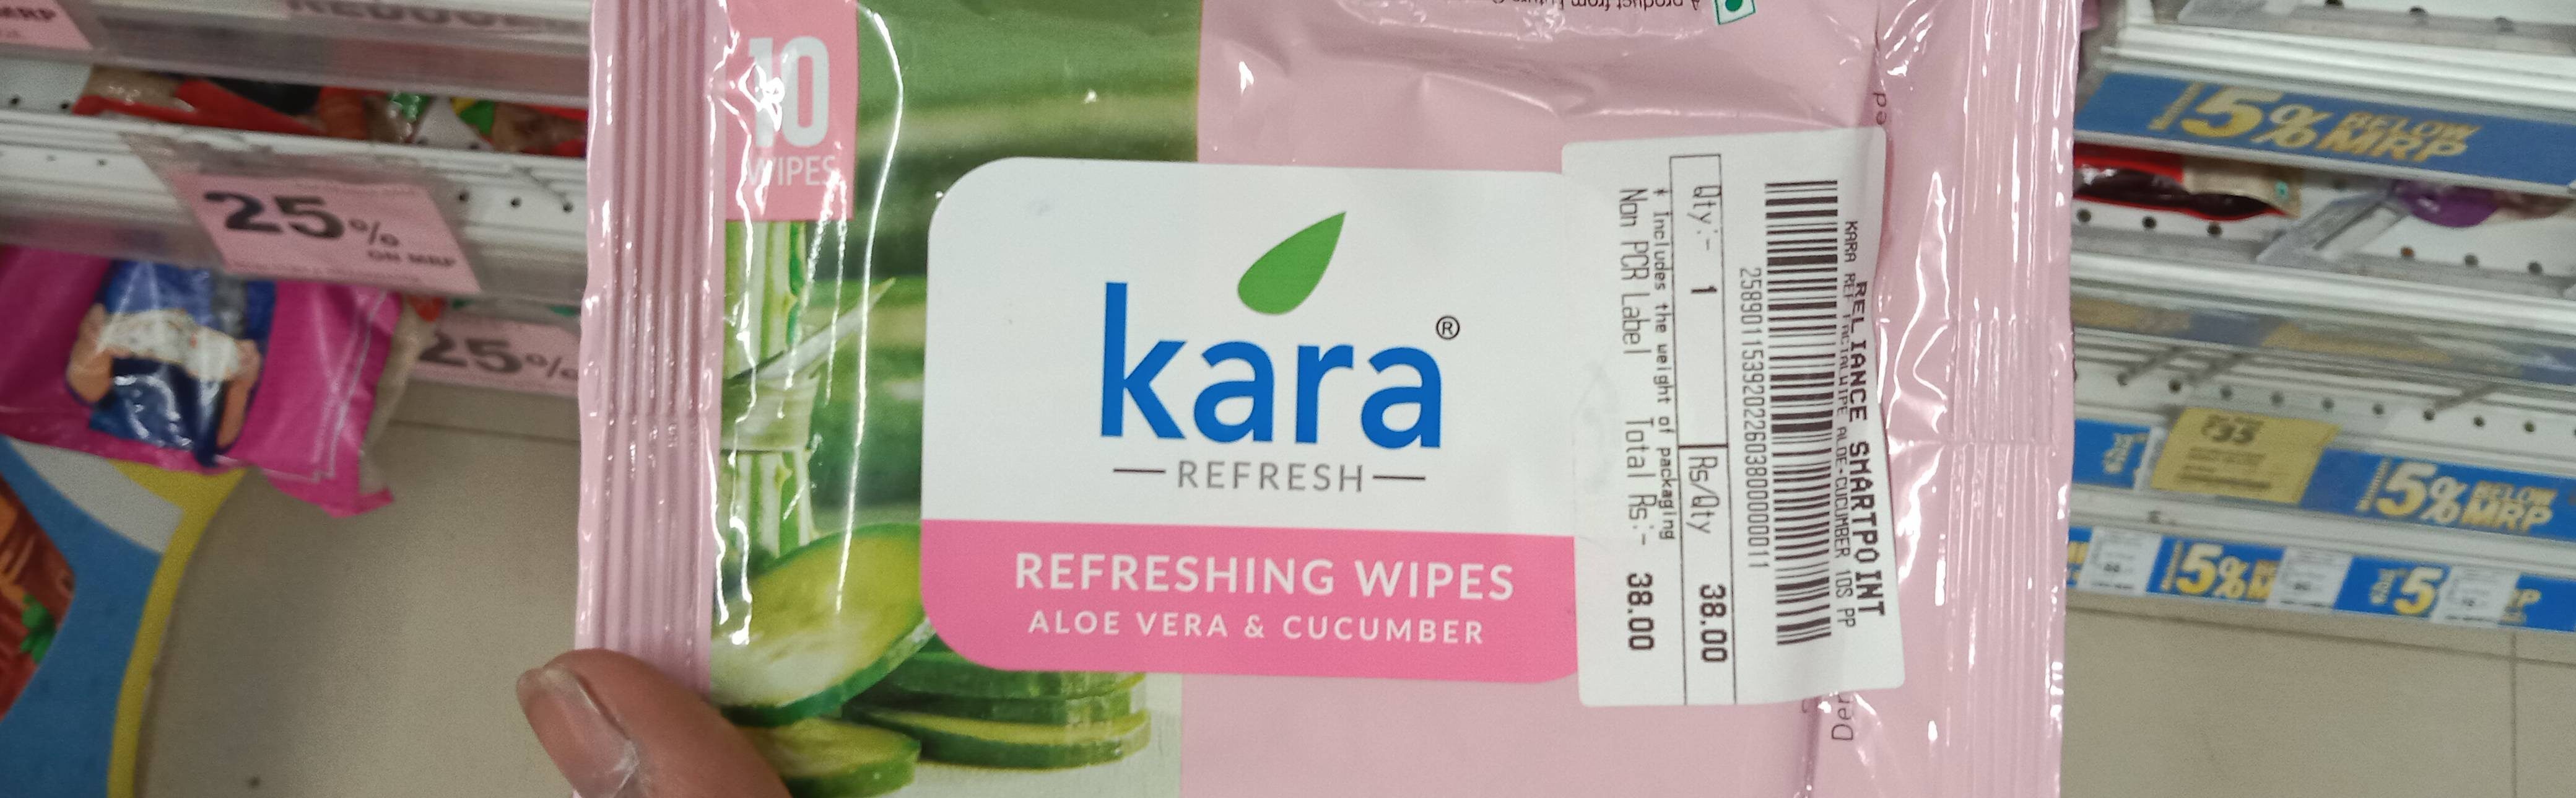 Kara Aloe vera & Cucumber Wipes - Product - en